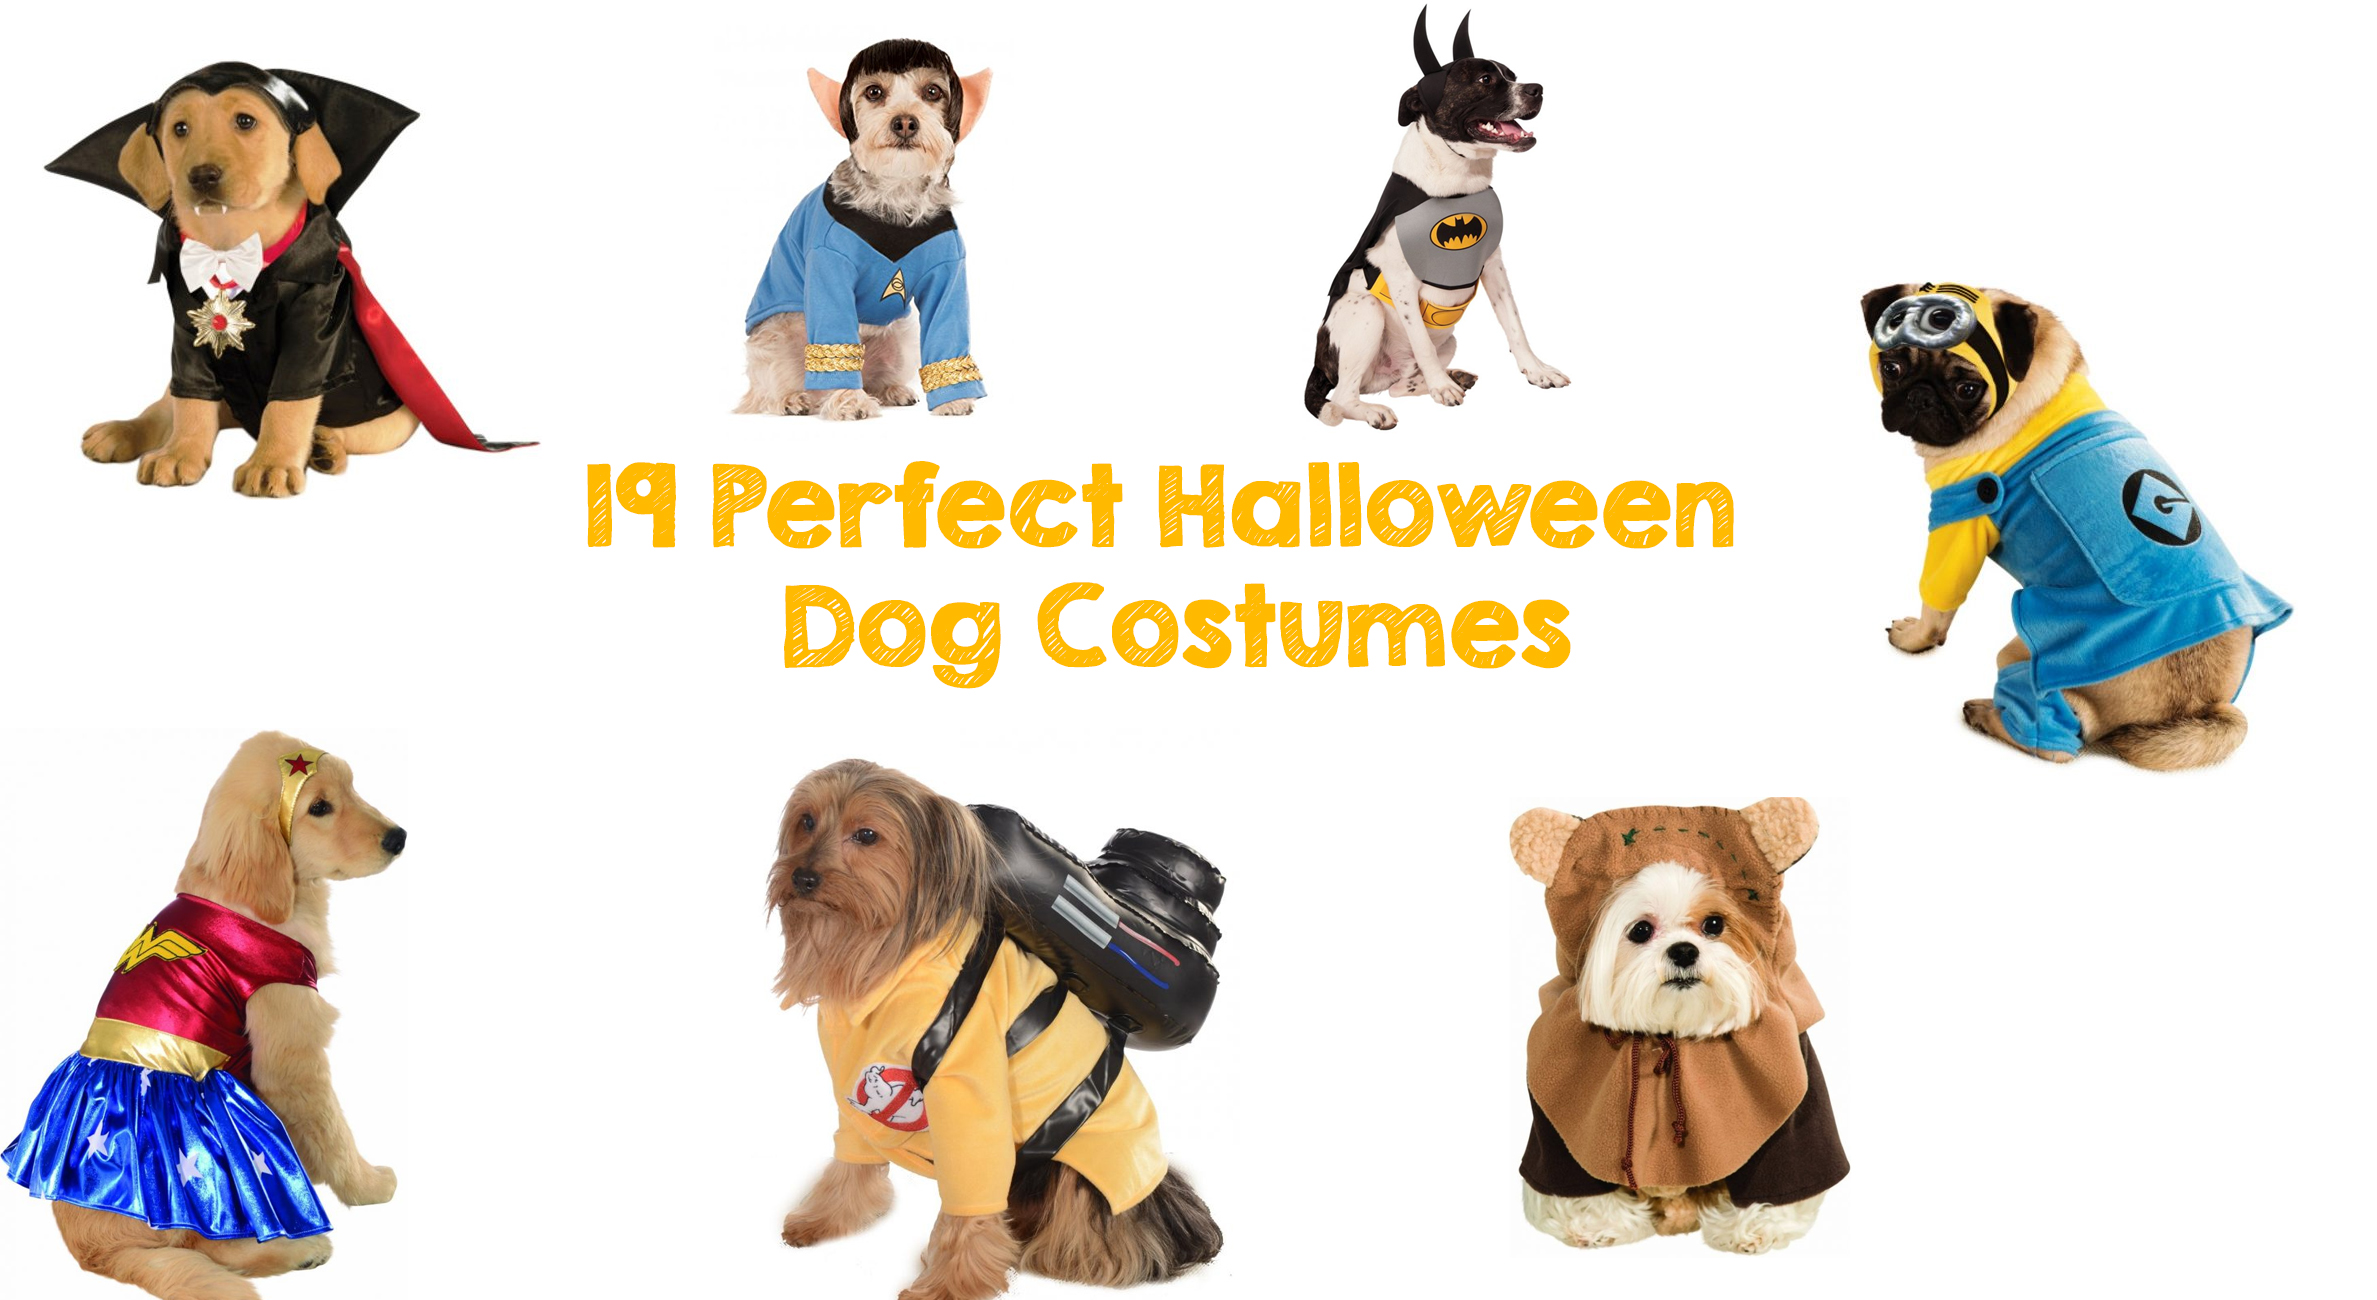 19 Perfect Halloween Dog Costumes Walyou